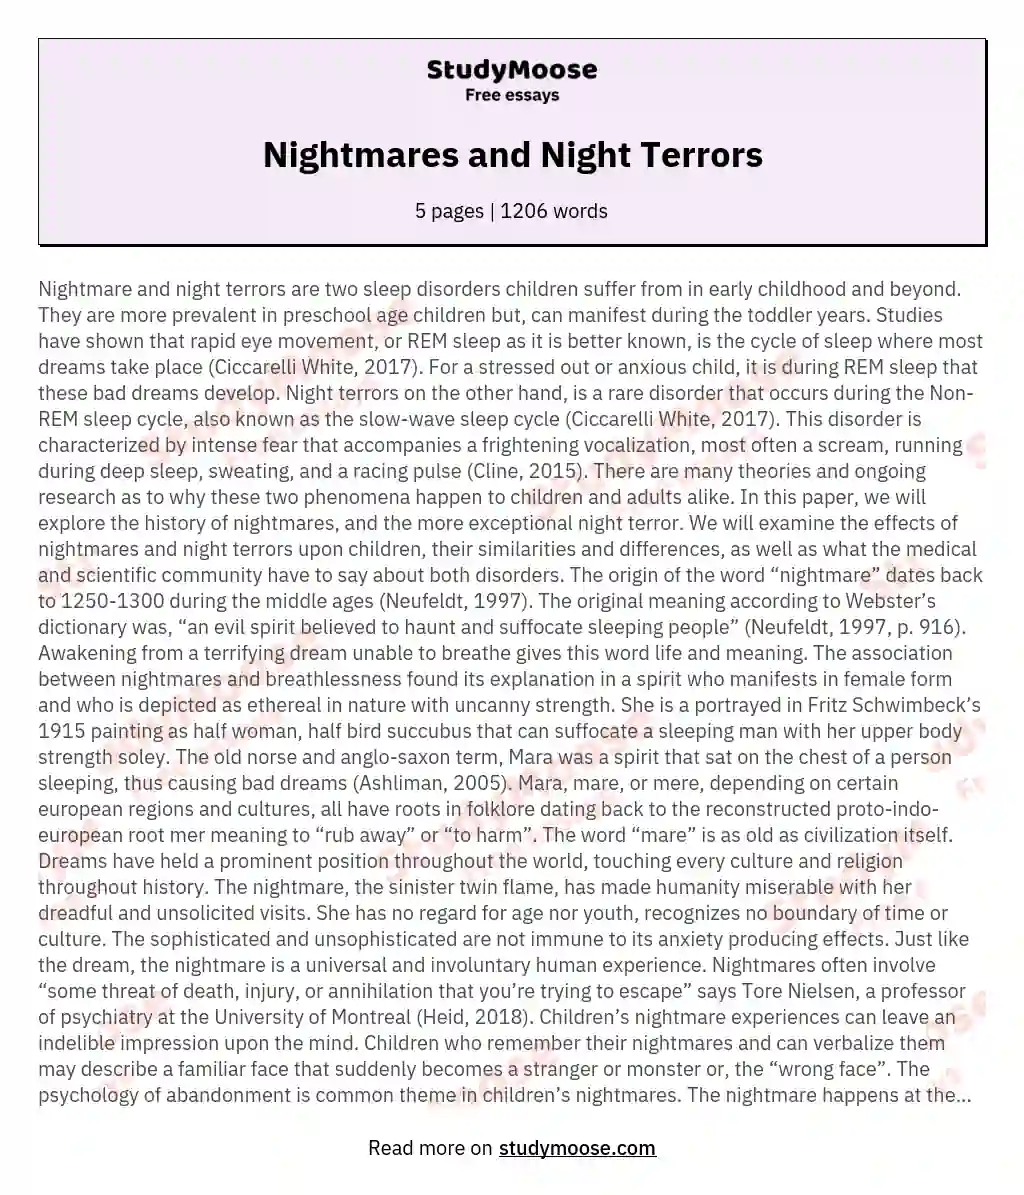 Nightmares and Night Terrors